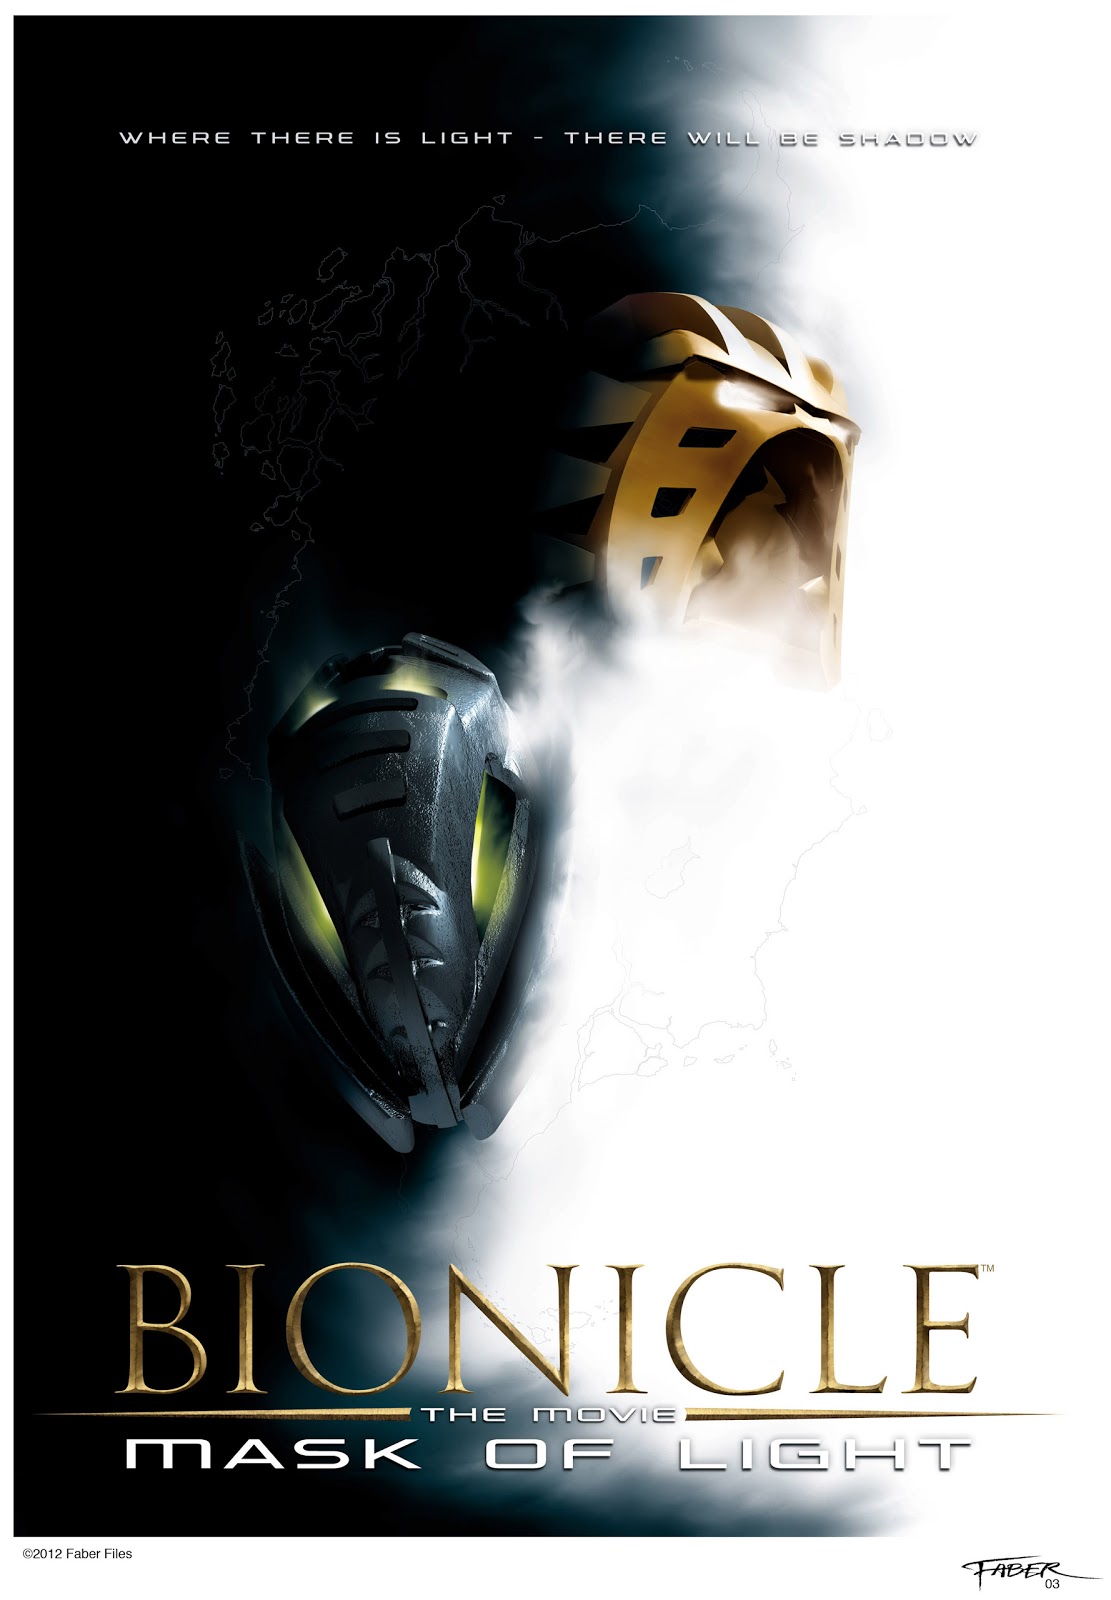 Bionicle Concept Arts - Página 2 Christian+Faber+Files_Light+vs+darkness+teaser